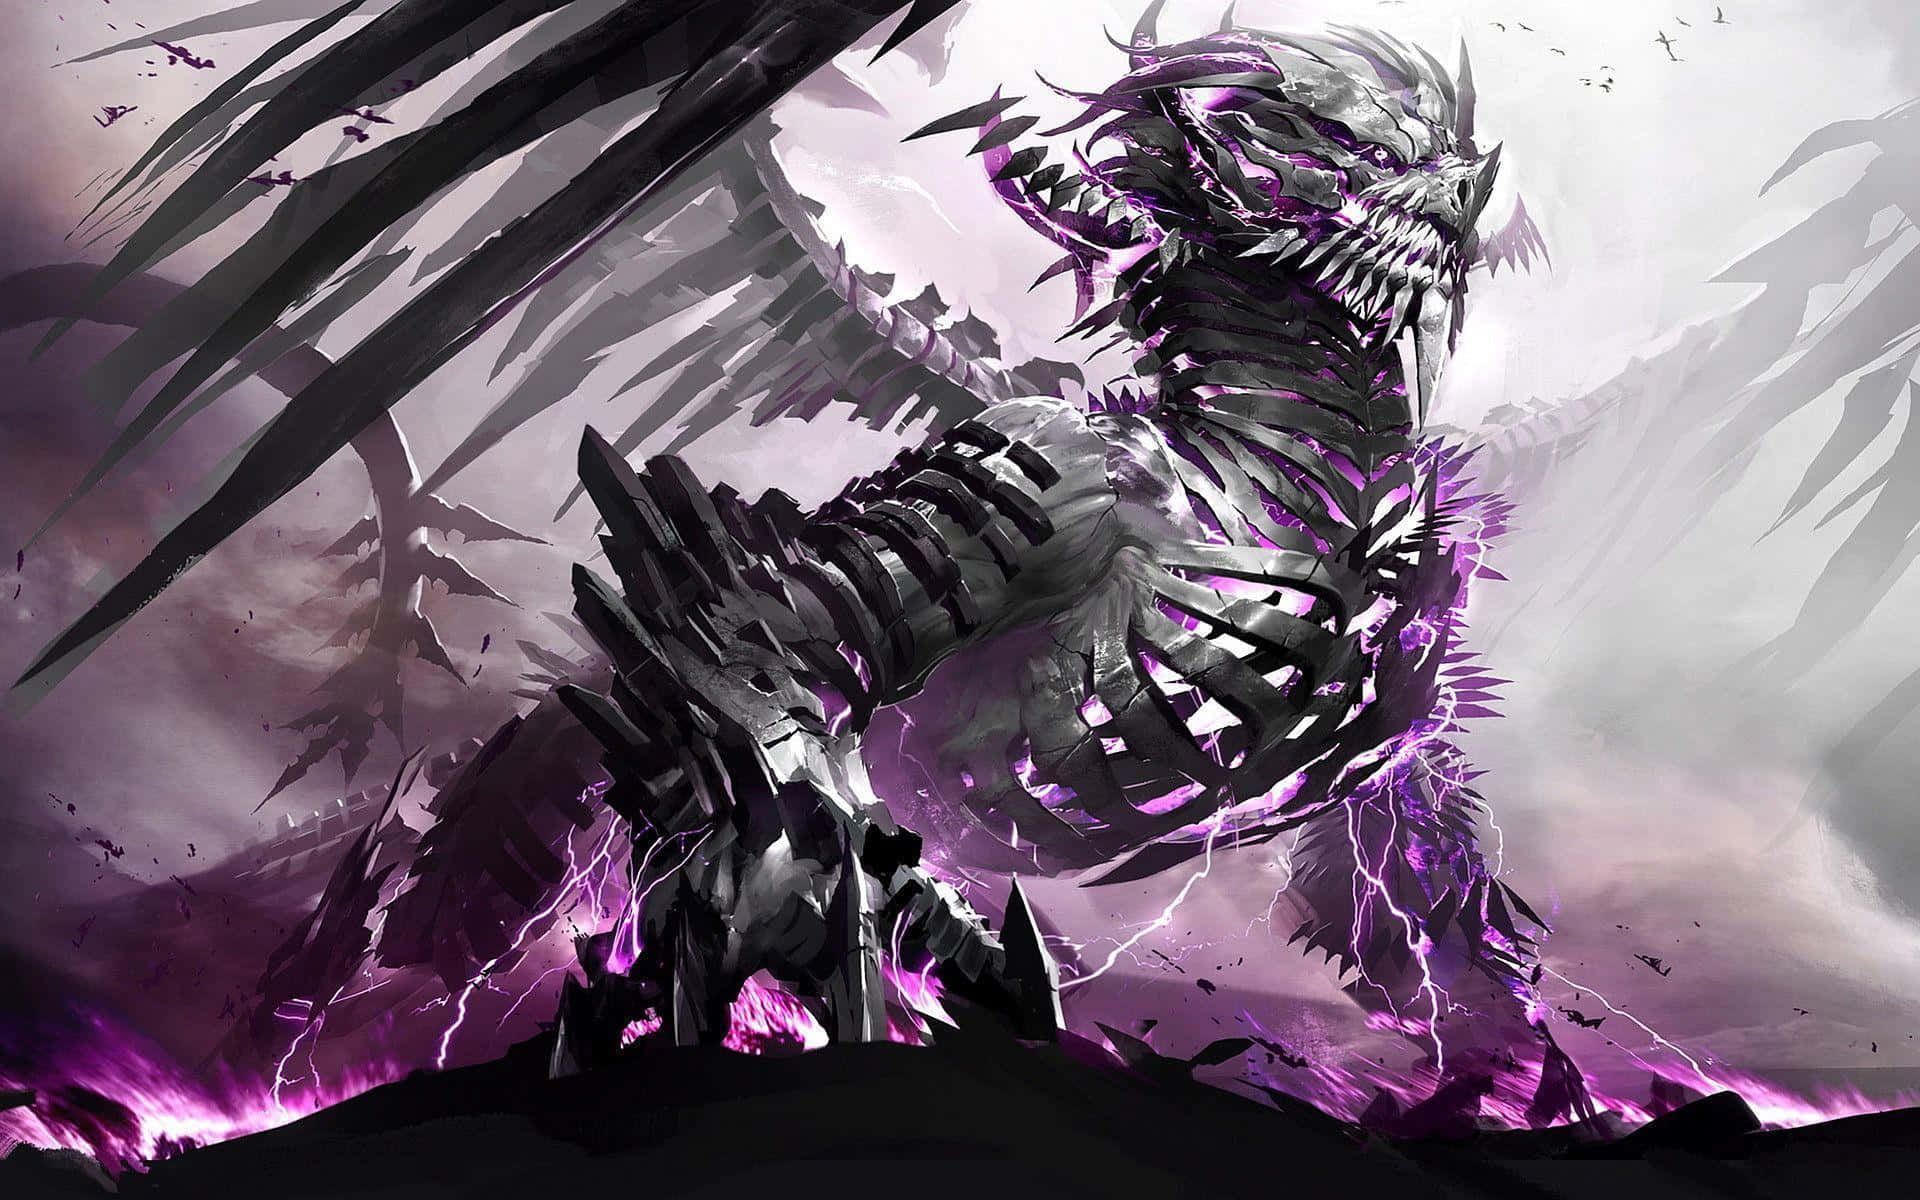 black and purple dragons wallpaper